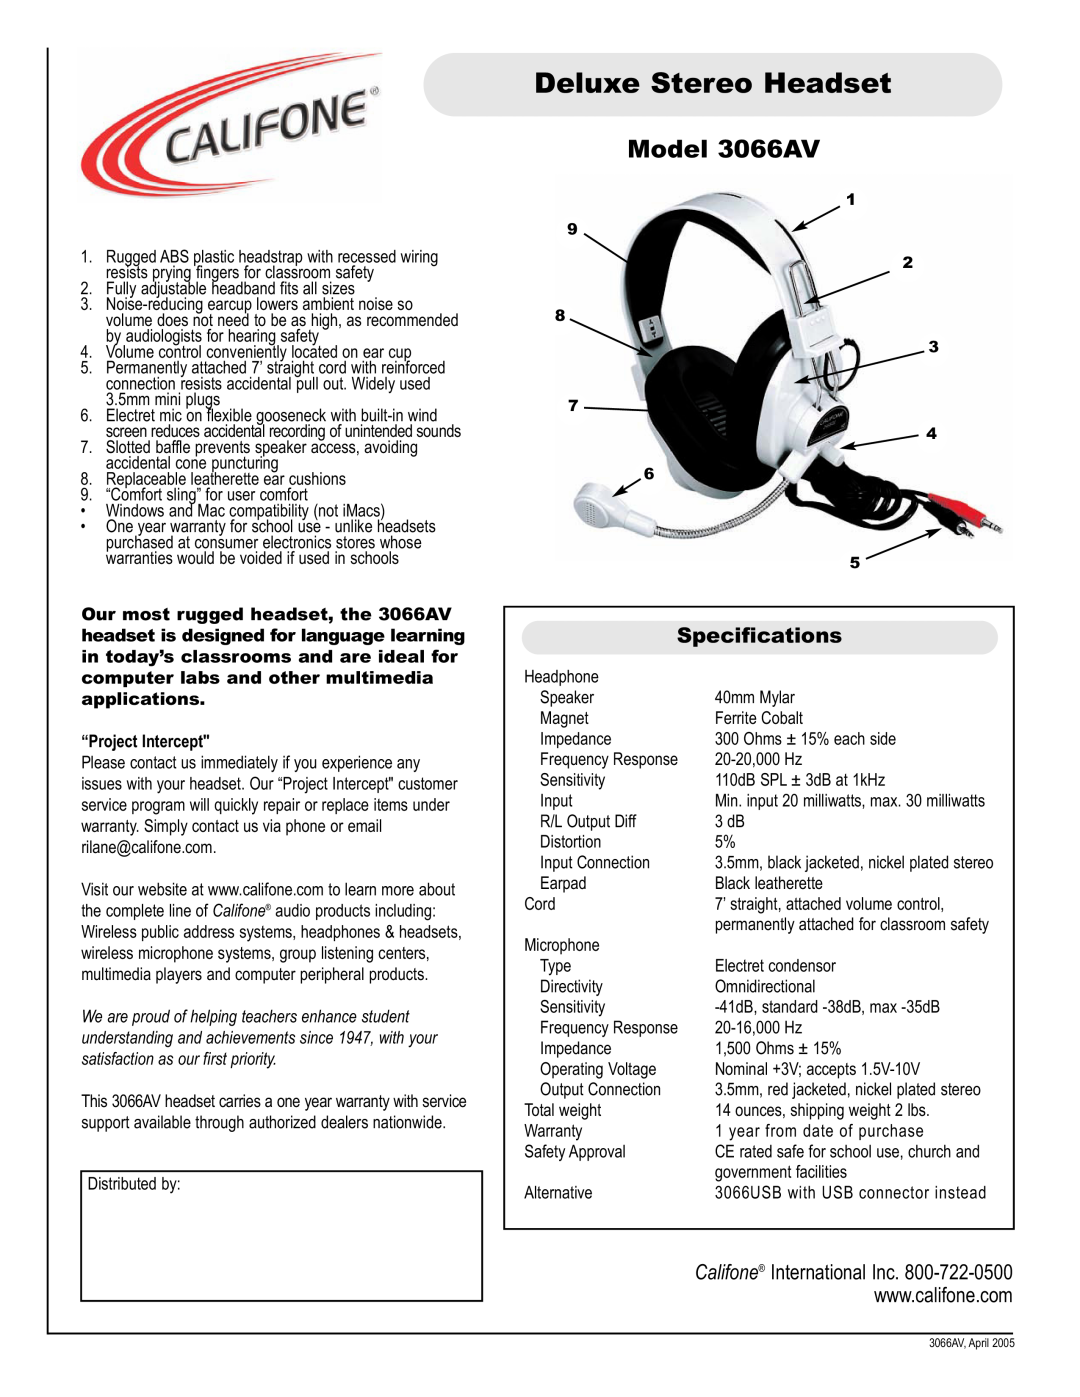 Califone specifications Deluxe Stereo Headset, Model 3066AV, Specifications, “Project Intercept 